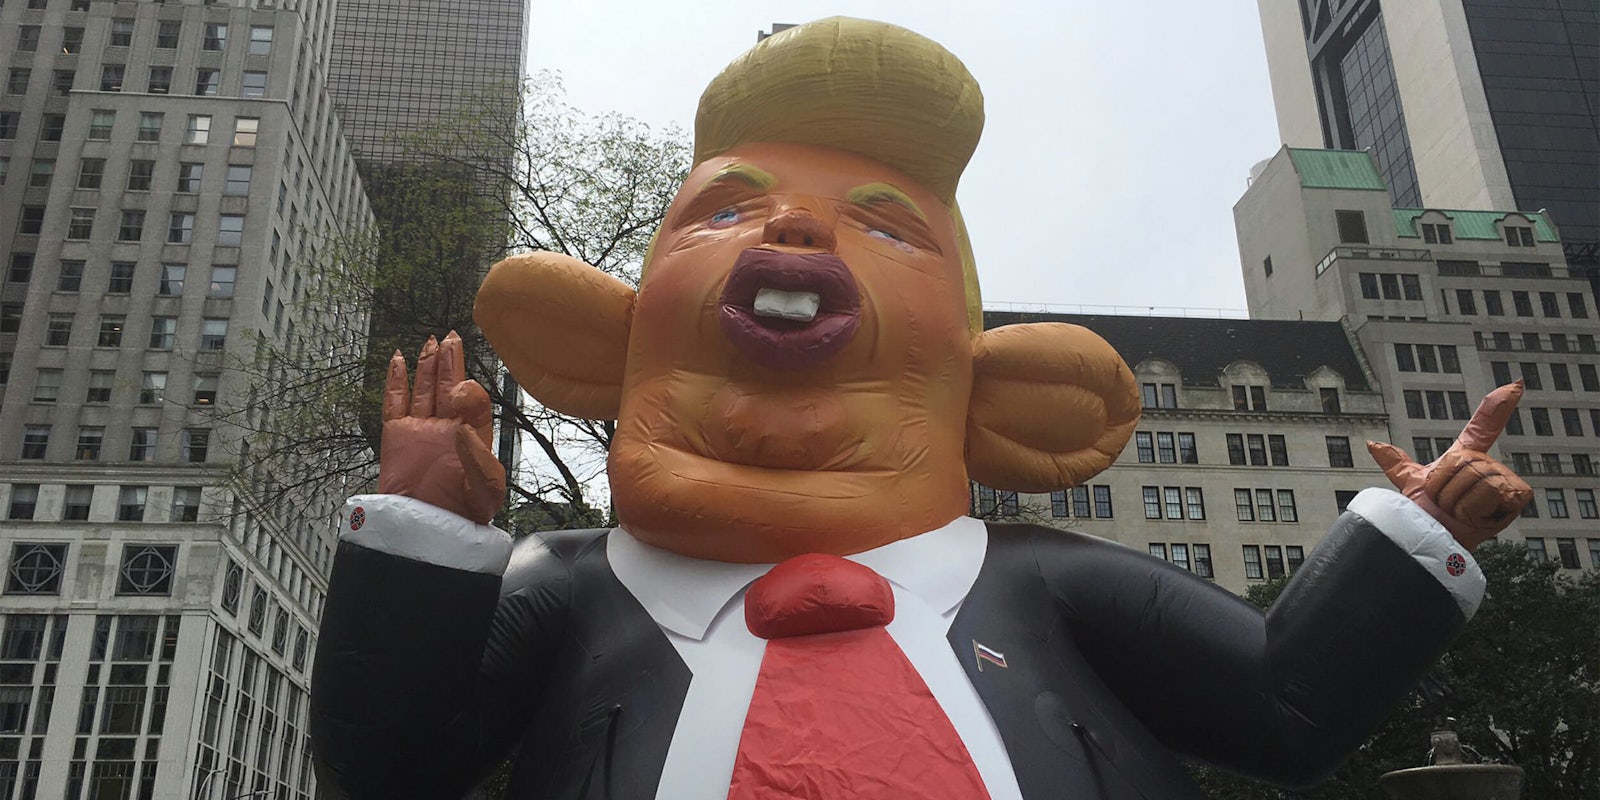 Inflatable Rat version of Donald Trump